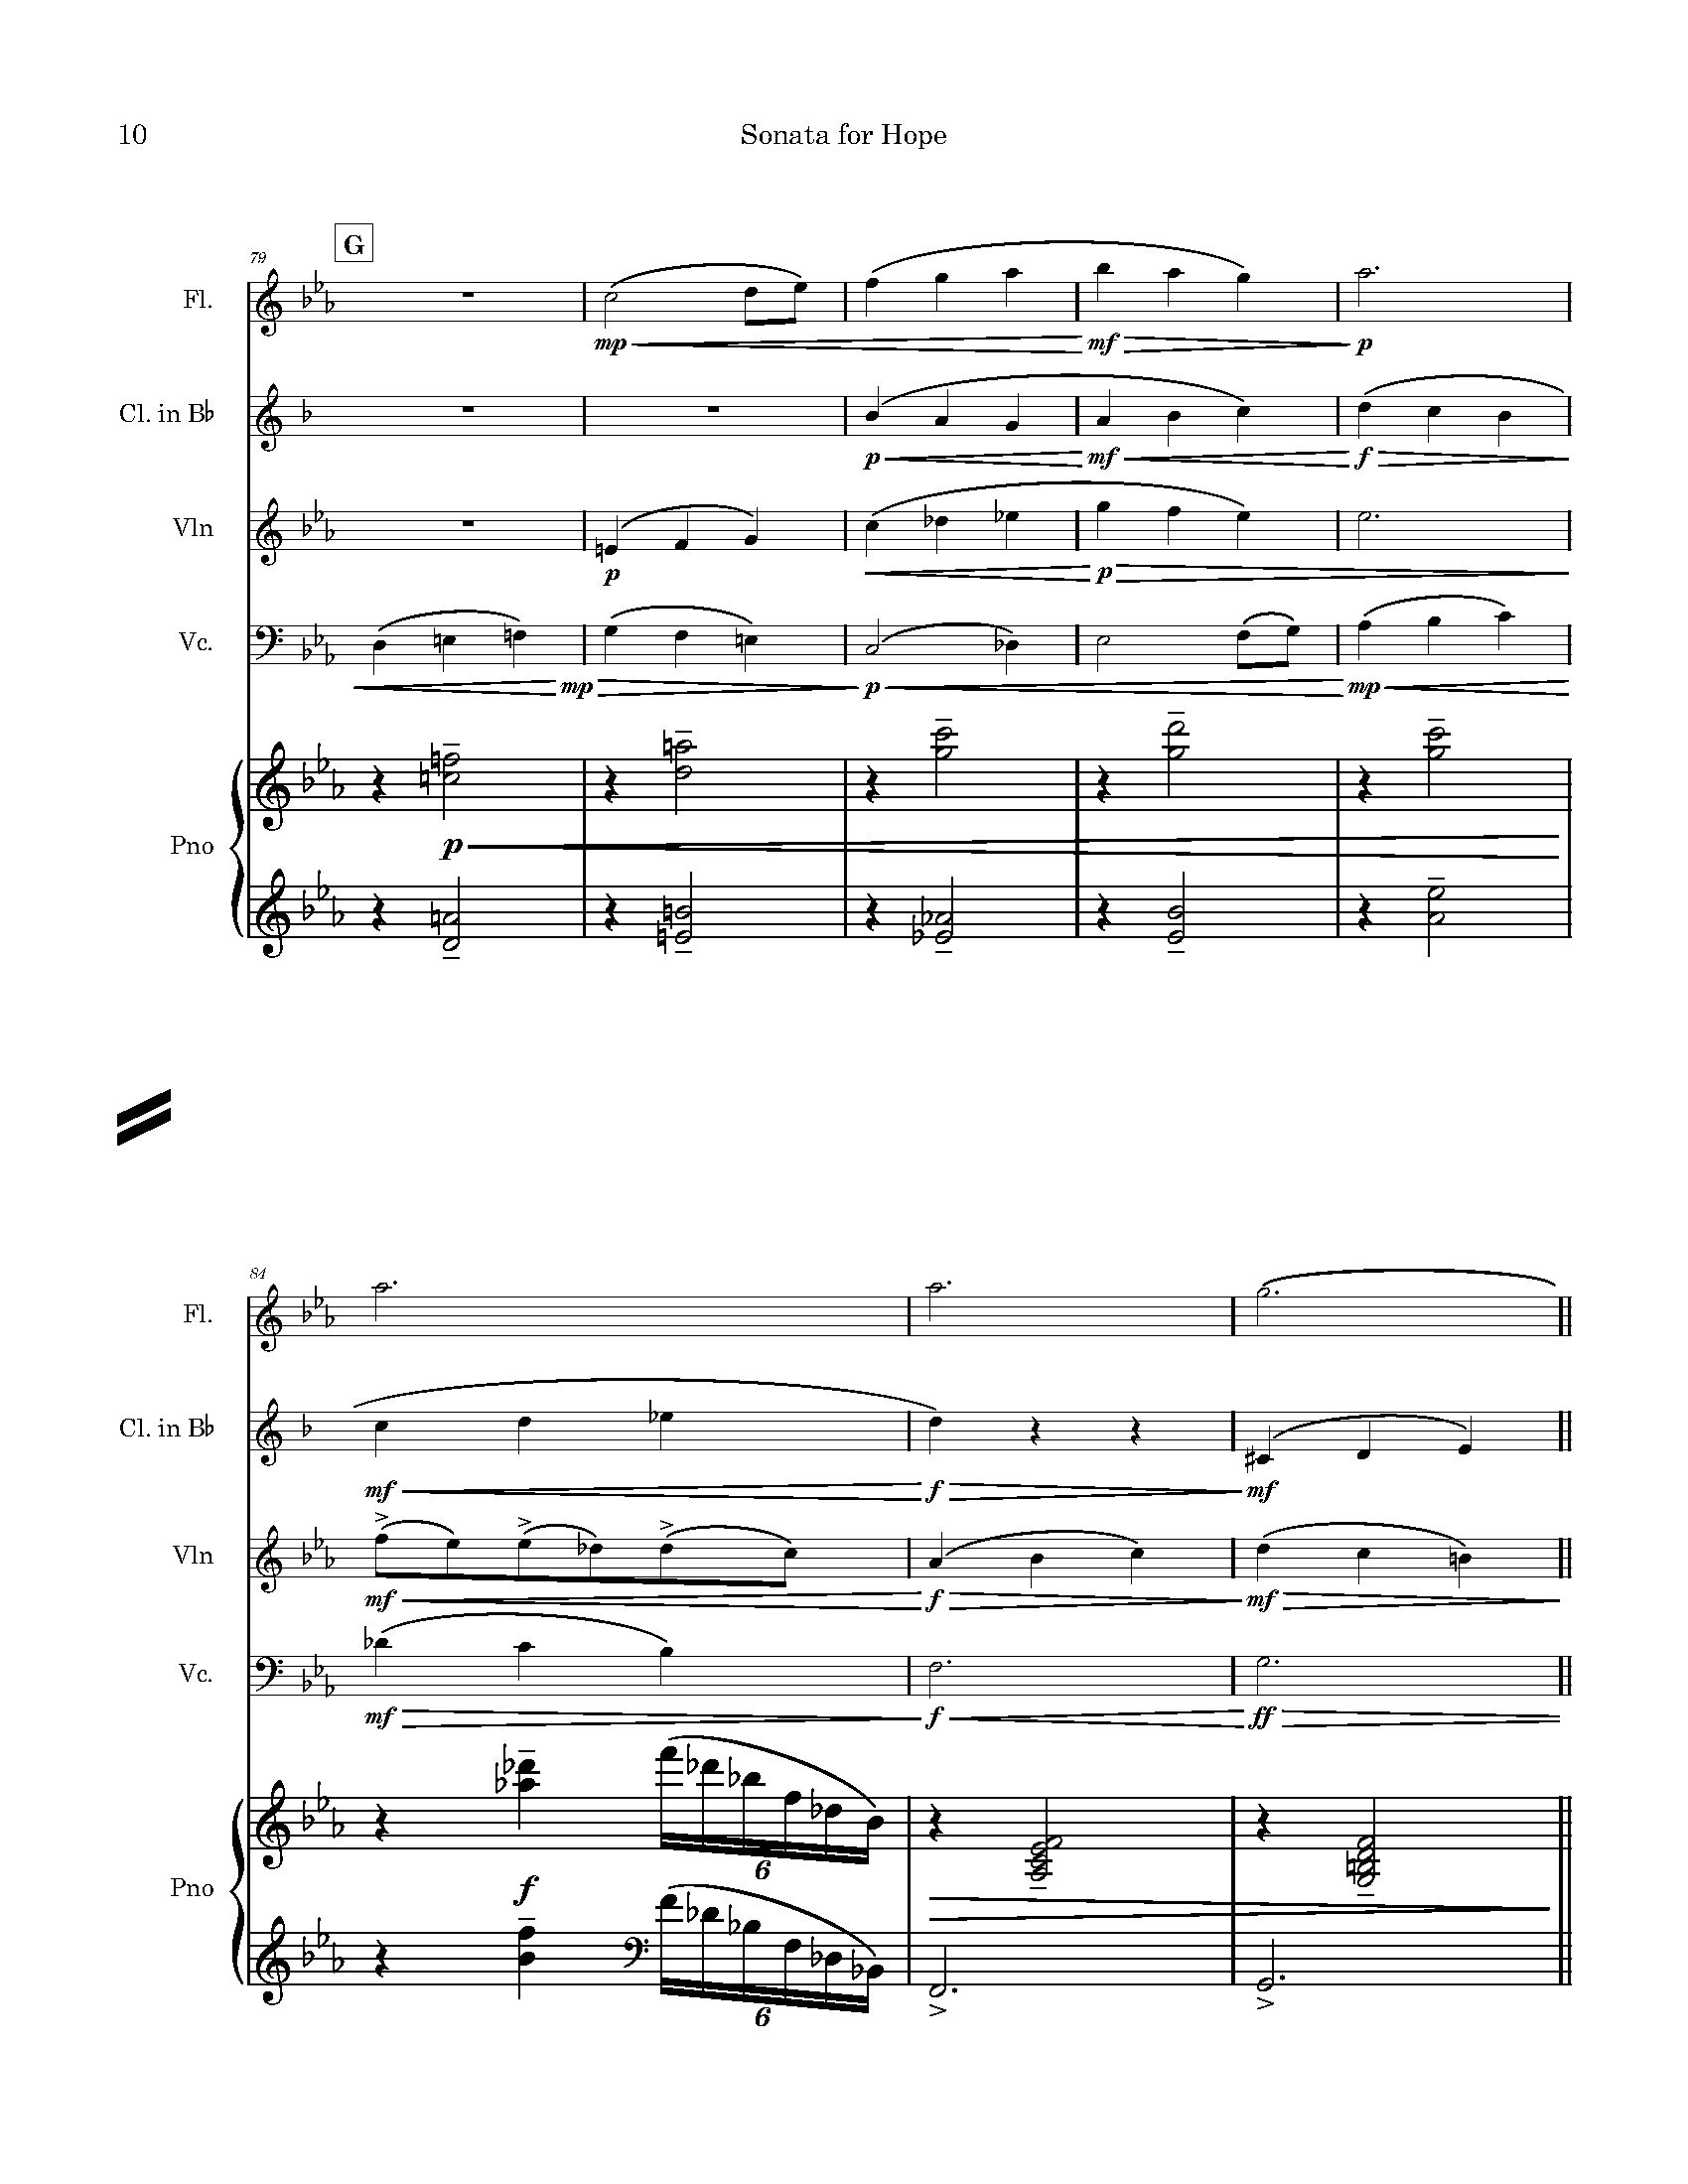 Sonata for Hope - Piano Score_Page_10.jpg